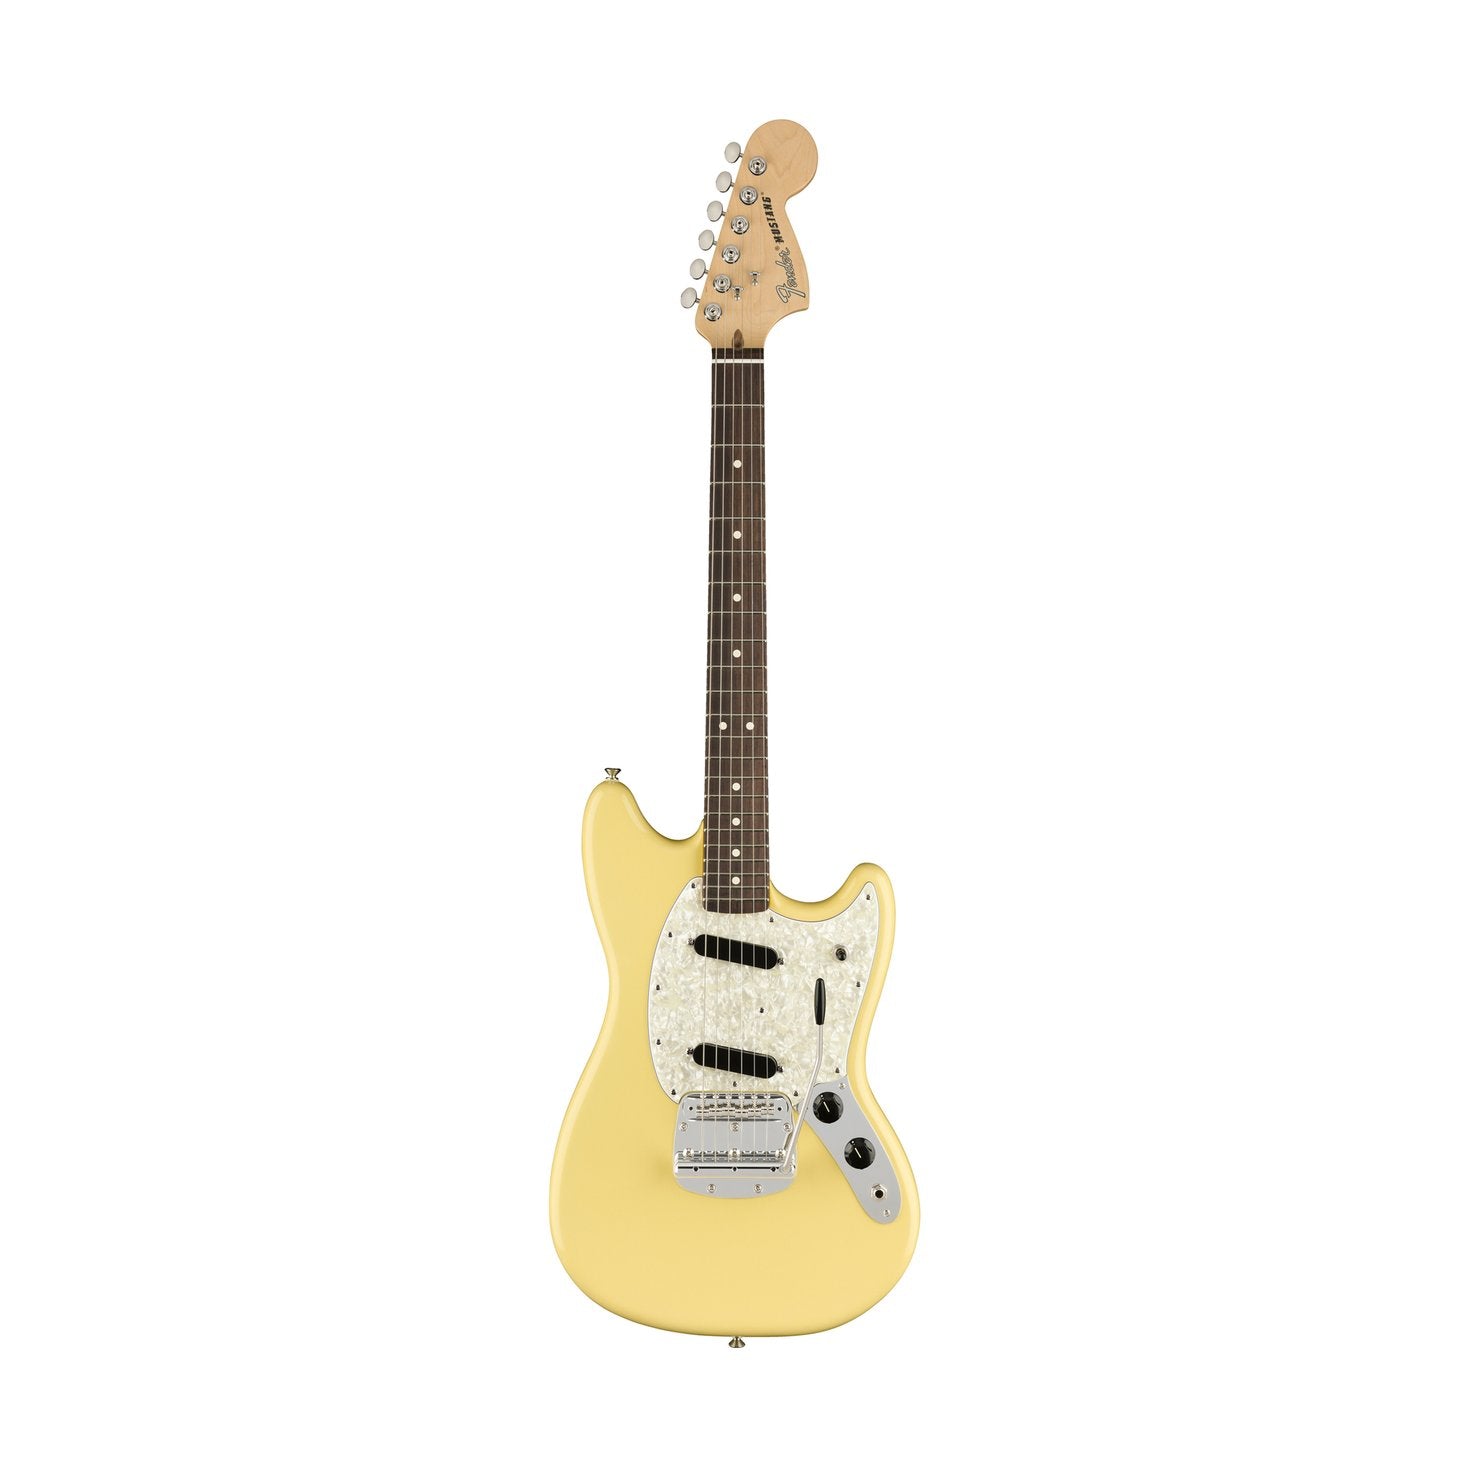 Fender American Performer Mustang Electric Guitar, RW FB, Vintage White, FENDER, ELECTRIC GUITAR, fender-electric-guitar-f03-011-5510-341, ZOSO MUSIC SDN BHD